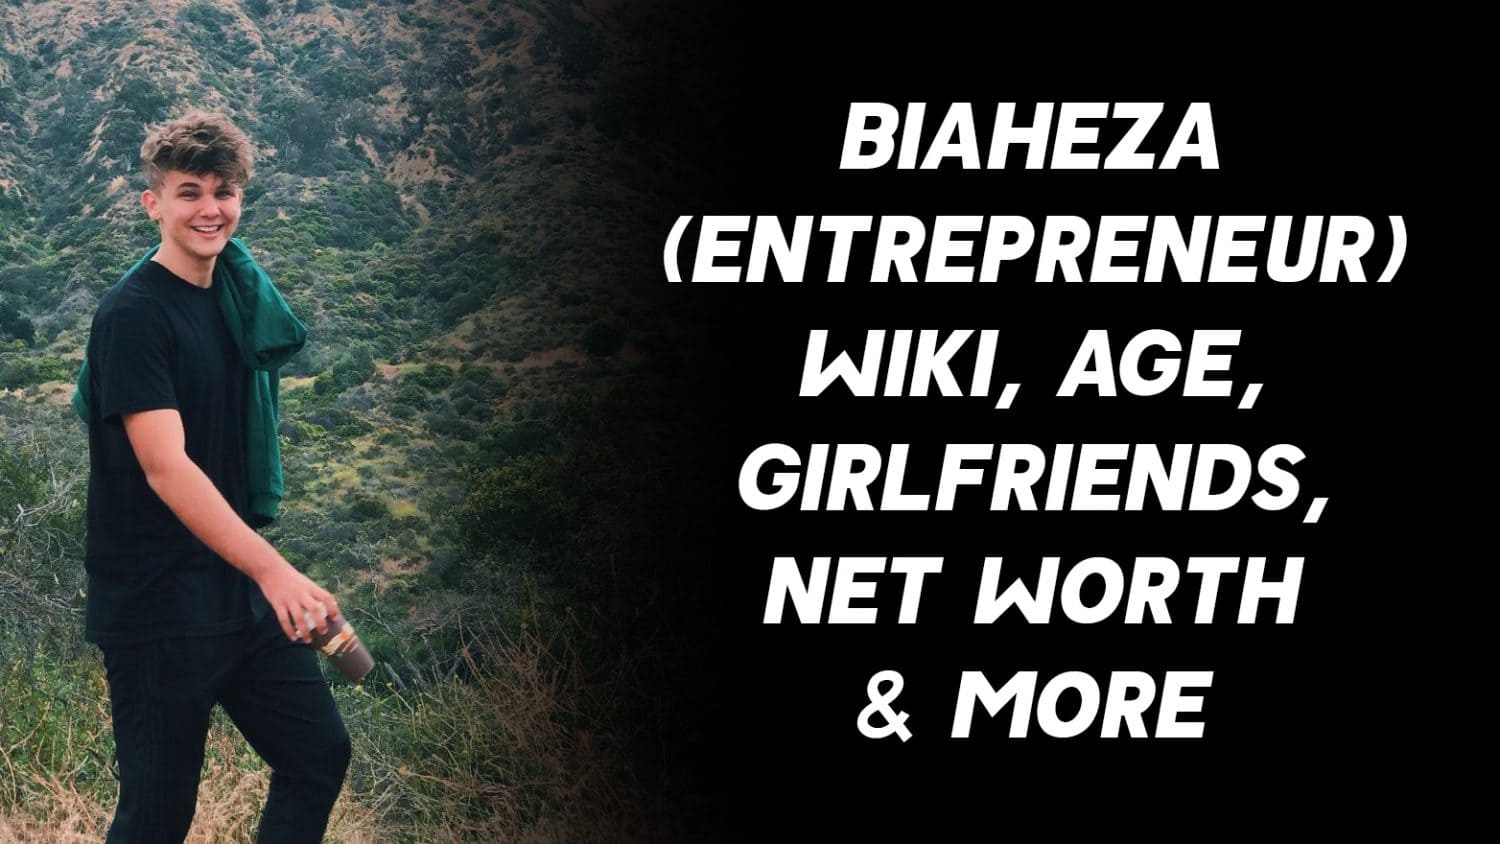 Biaheza (Entrepreneur) Wiki, Age, Girlfriends, Net Worth & More 1